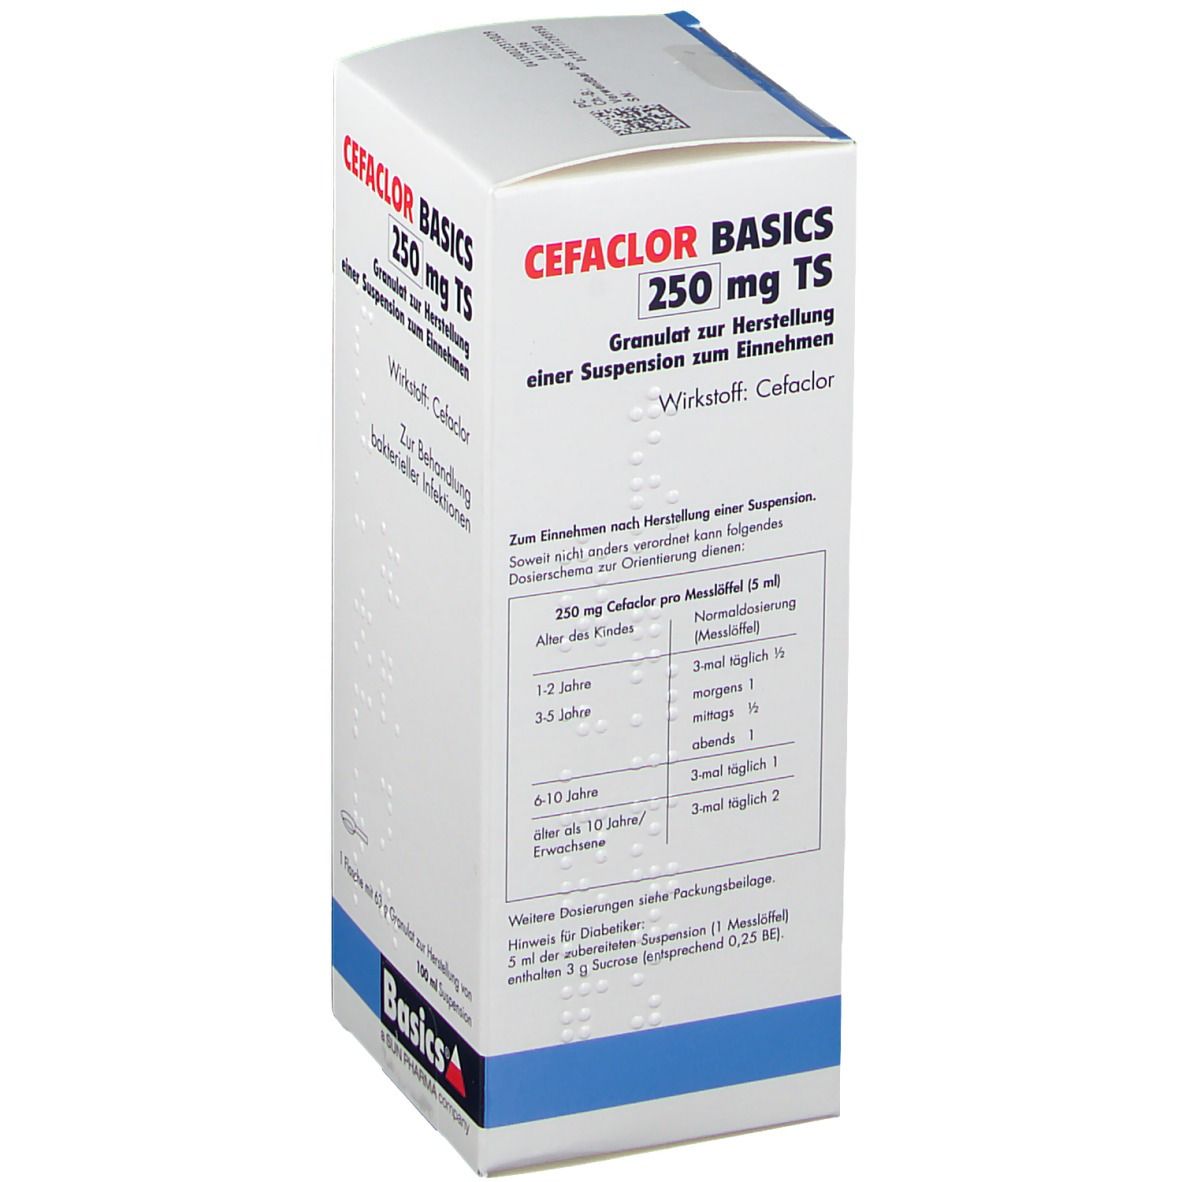 CEFACLOR BASICS 250 mg TS